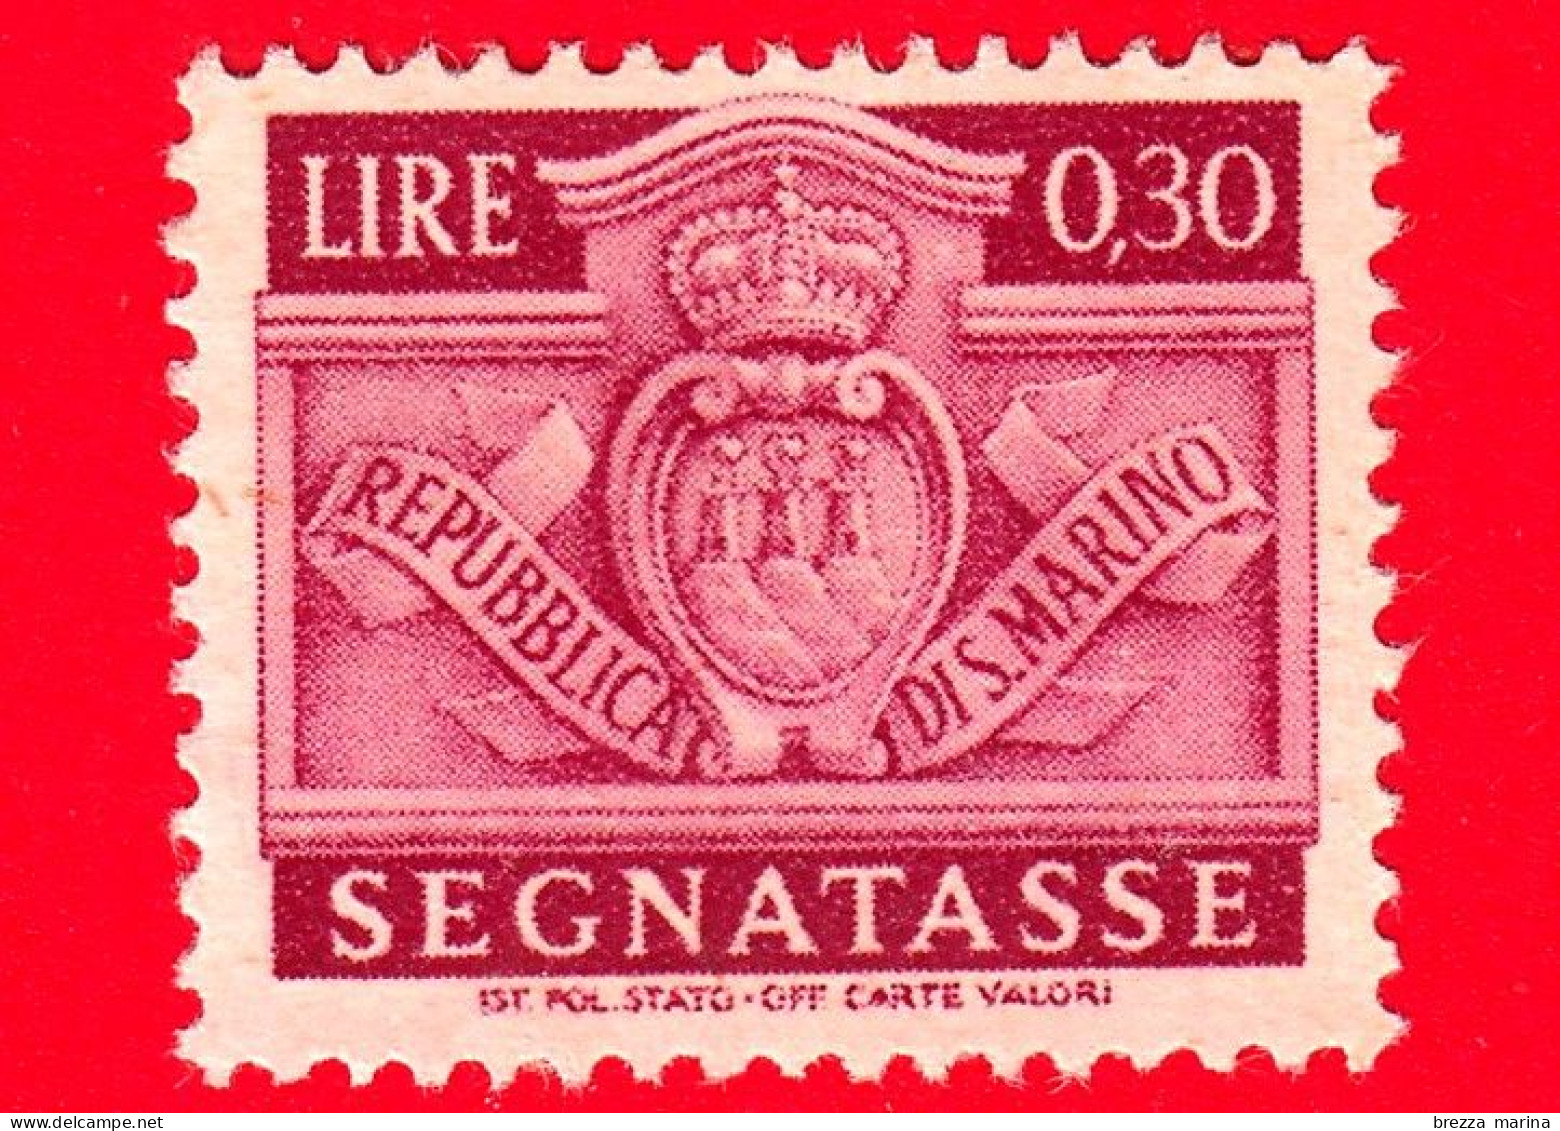 SAN MARINO -  Usato - 1945 - Stemma - Segnatasse -  Stemma Di San Marino - 0.30 - Postage Due